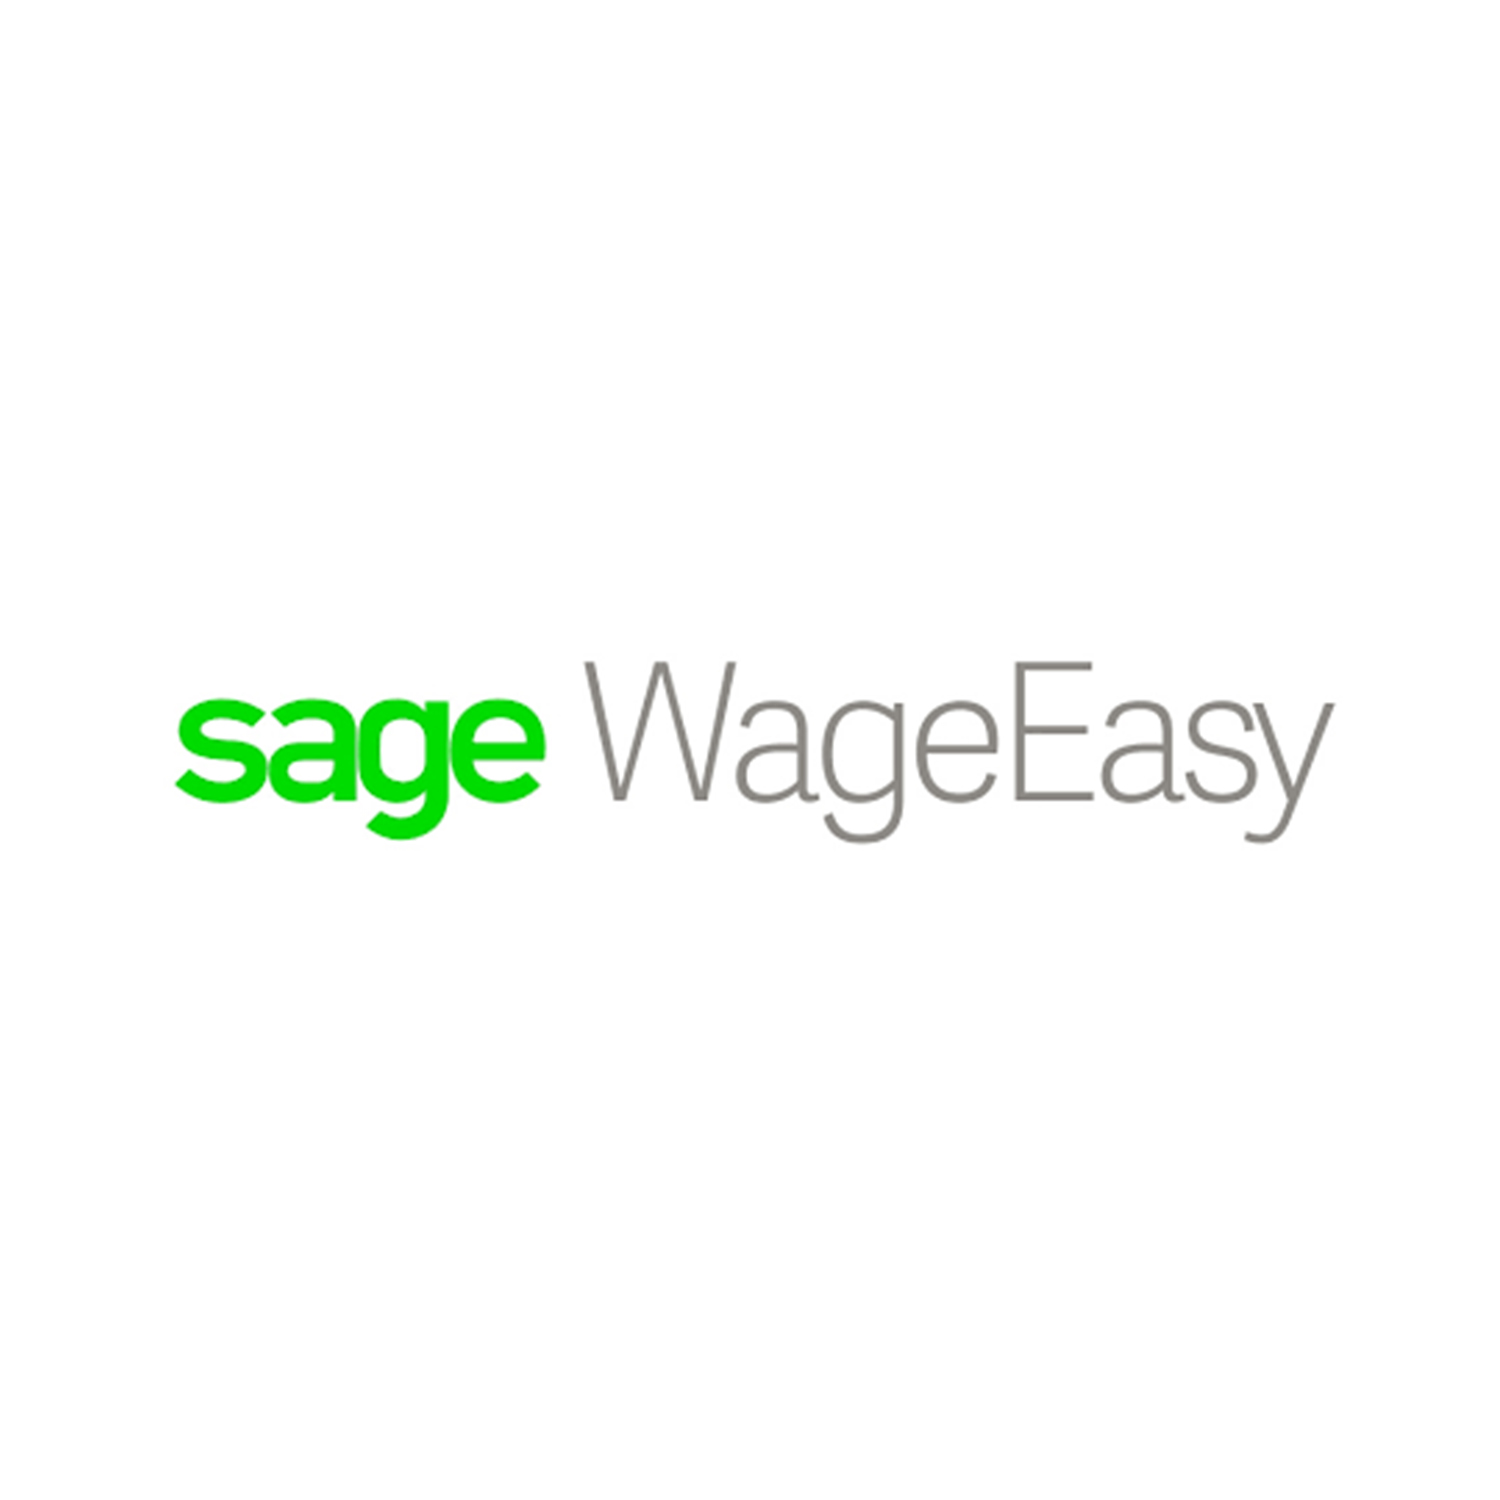 SAGE WageEasy